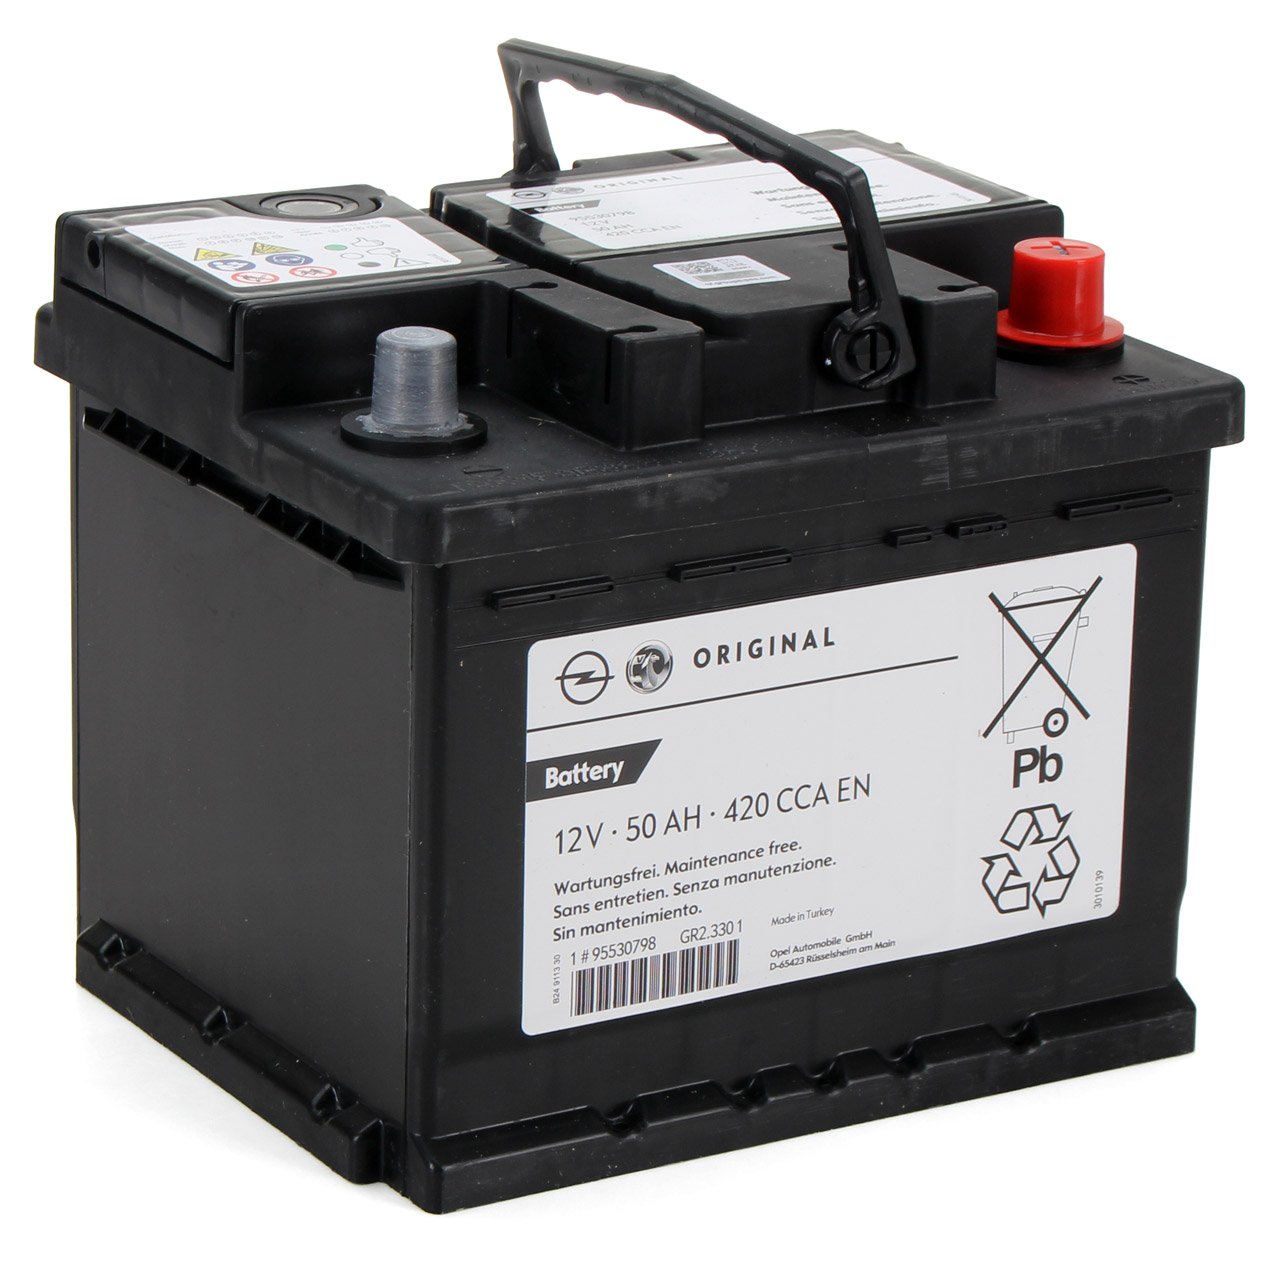 ORIGINAL GM Opel Autobatterie Starterbatterie 12V 50Ah 420 CCA EN 95527530